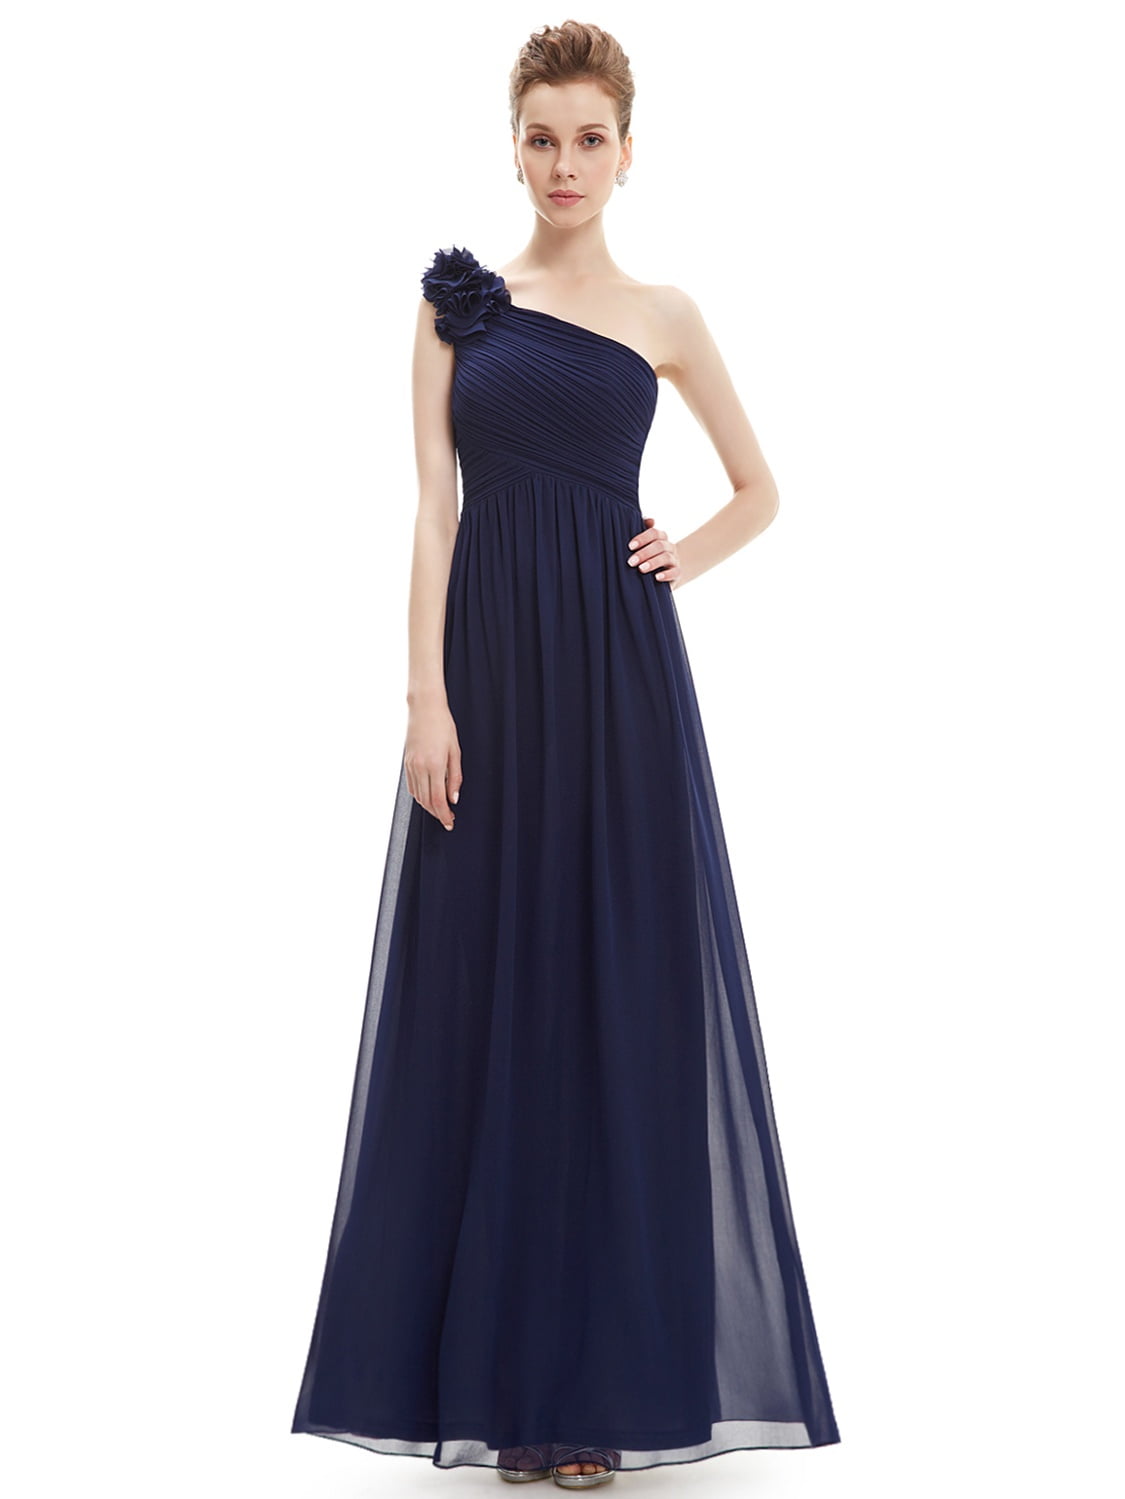 navy blue one shoulder bridesmaid dress